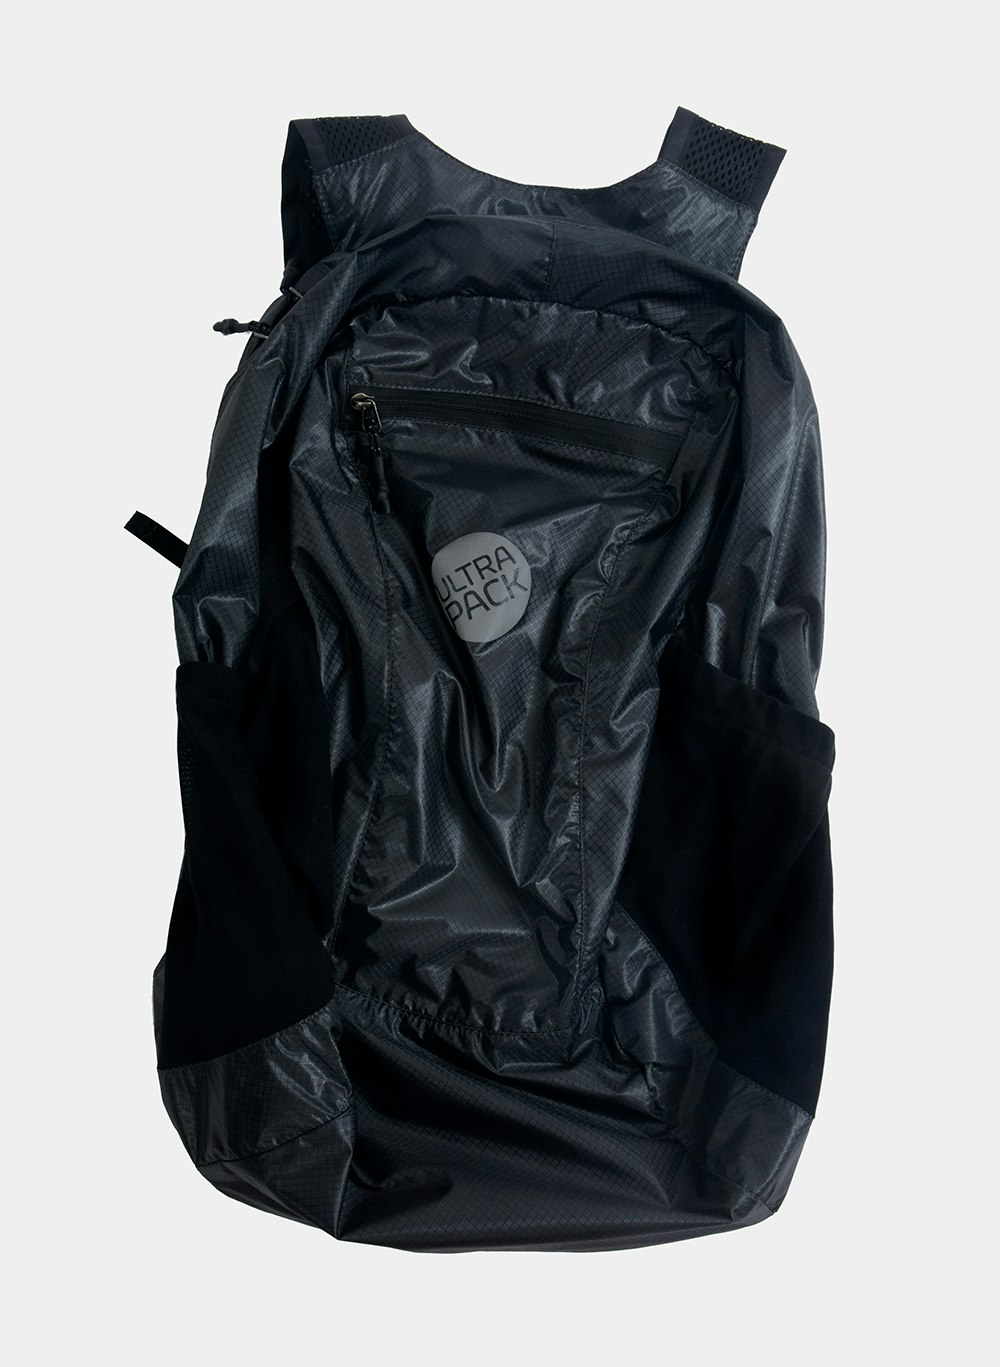 AegisMax Ultralight Backpack